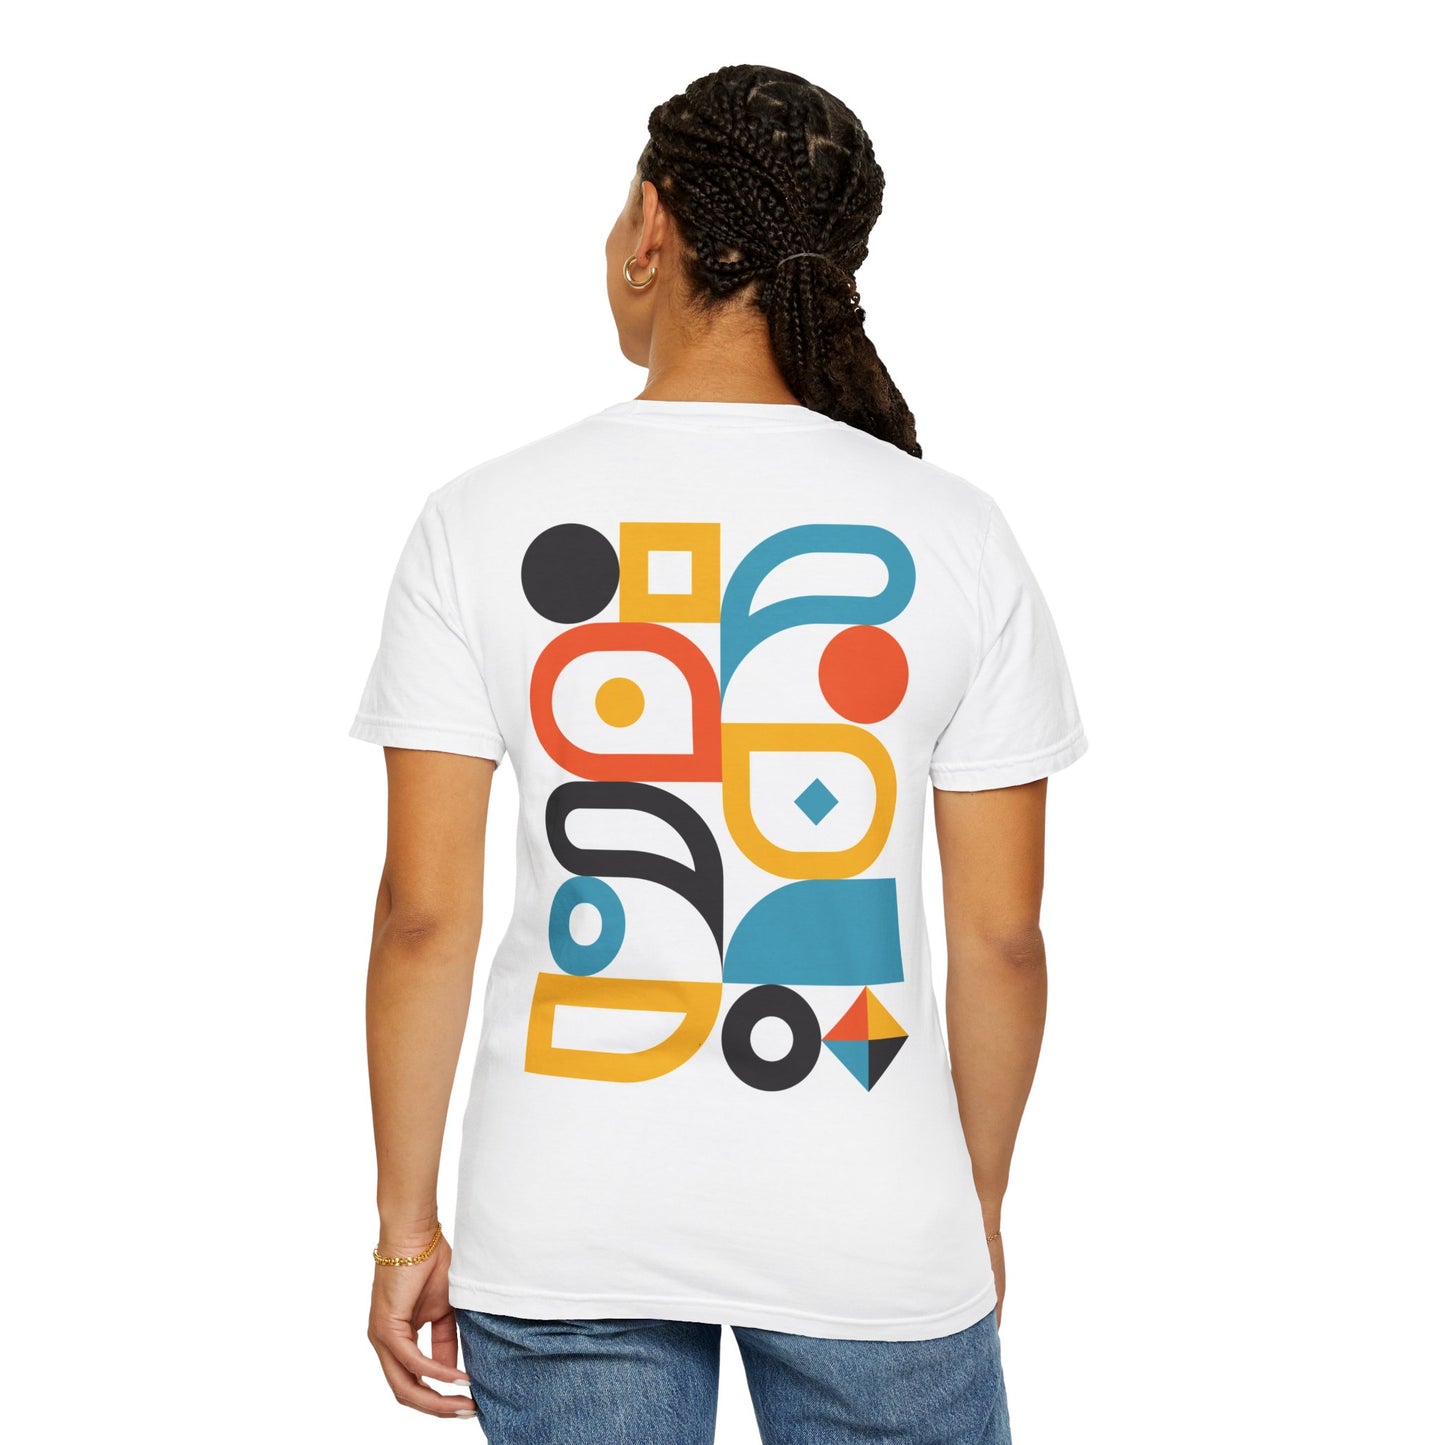 Comical - Unisex Garment-Dyed T-shirt